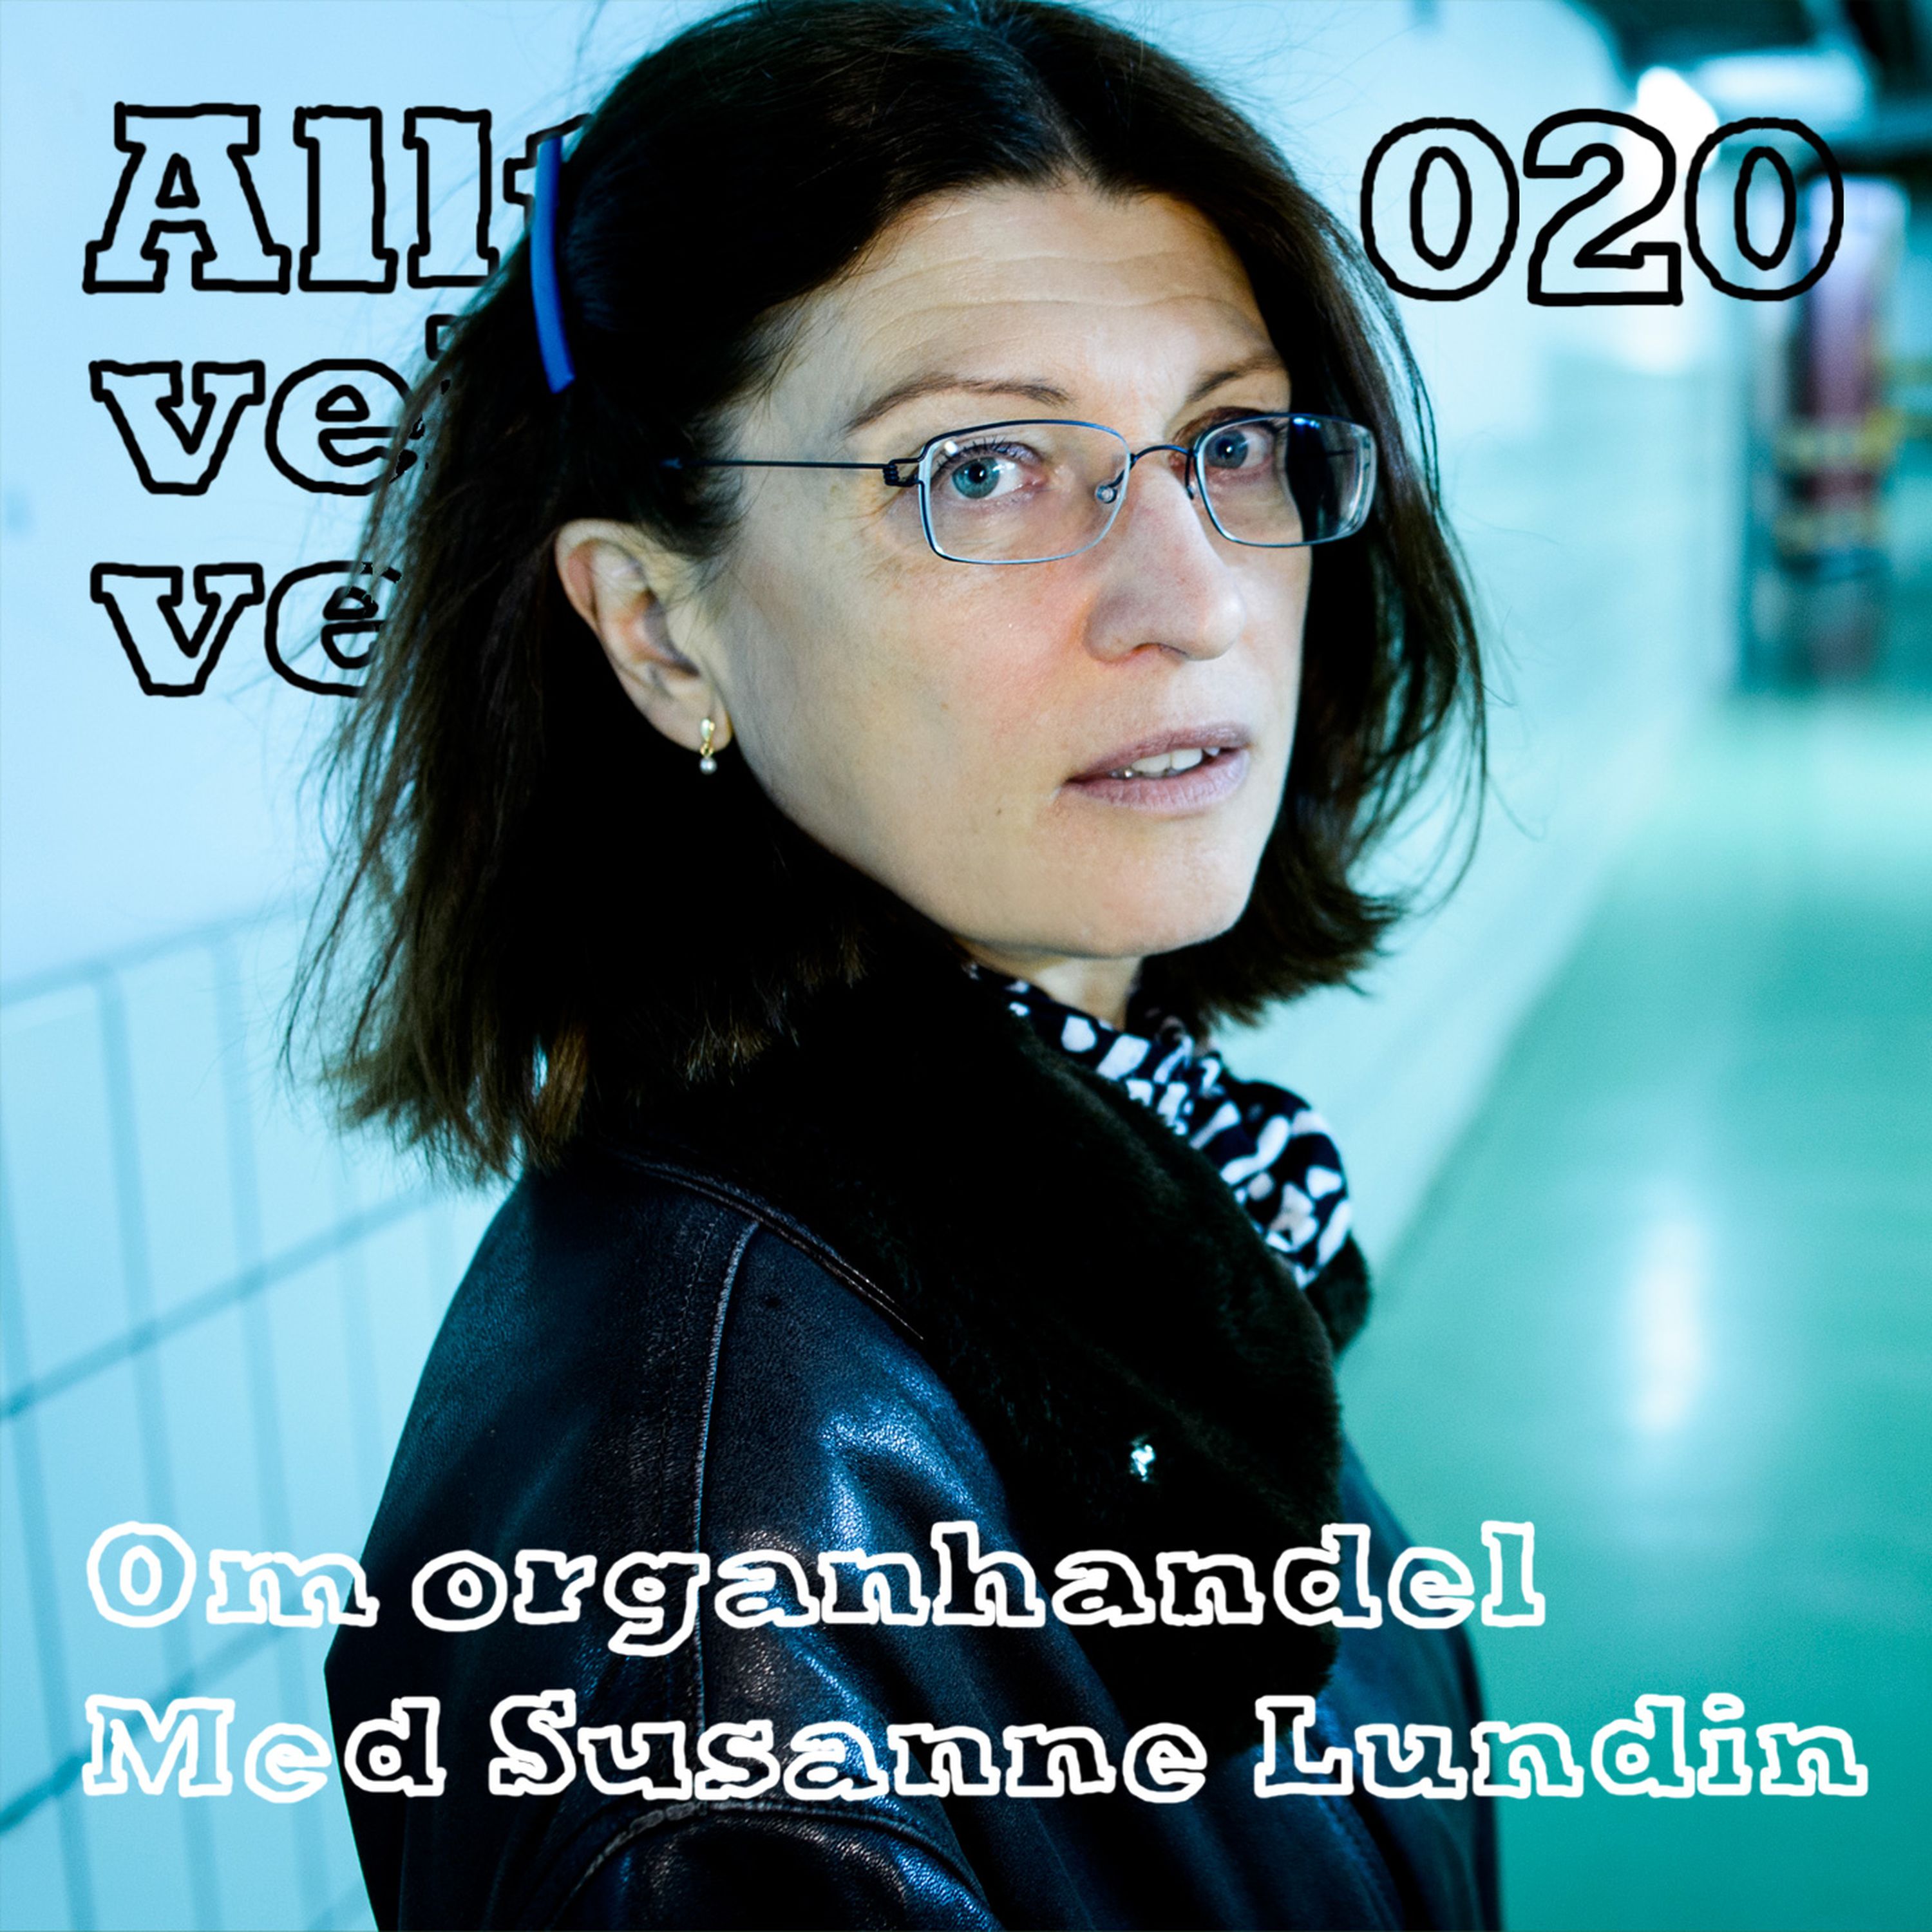 020 Om organhandel med Susanne Lundin